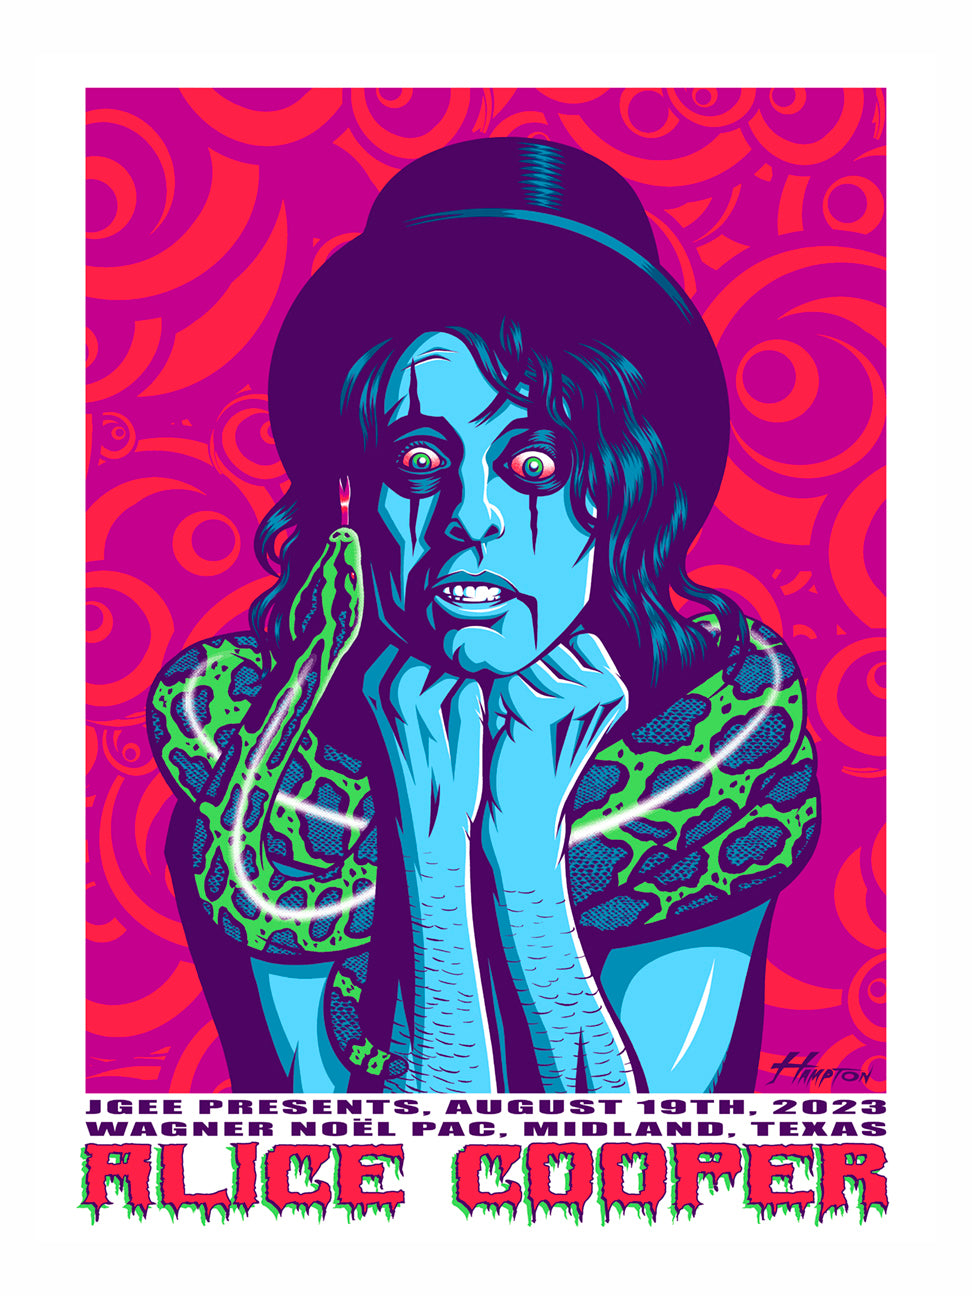 Alice Cooper in Texas poster